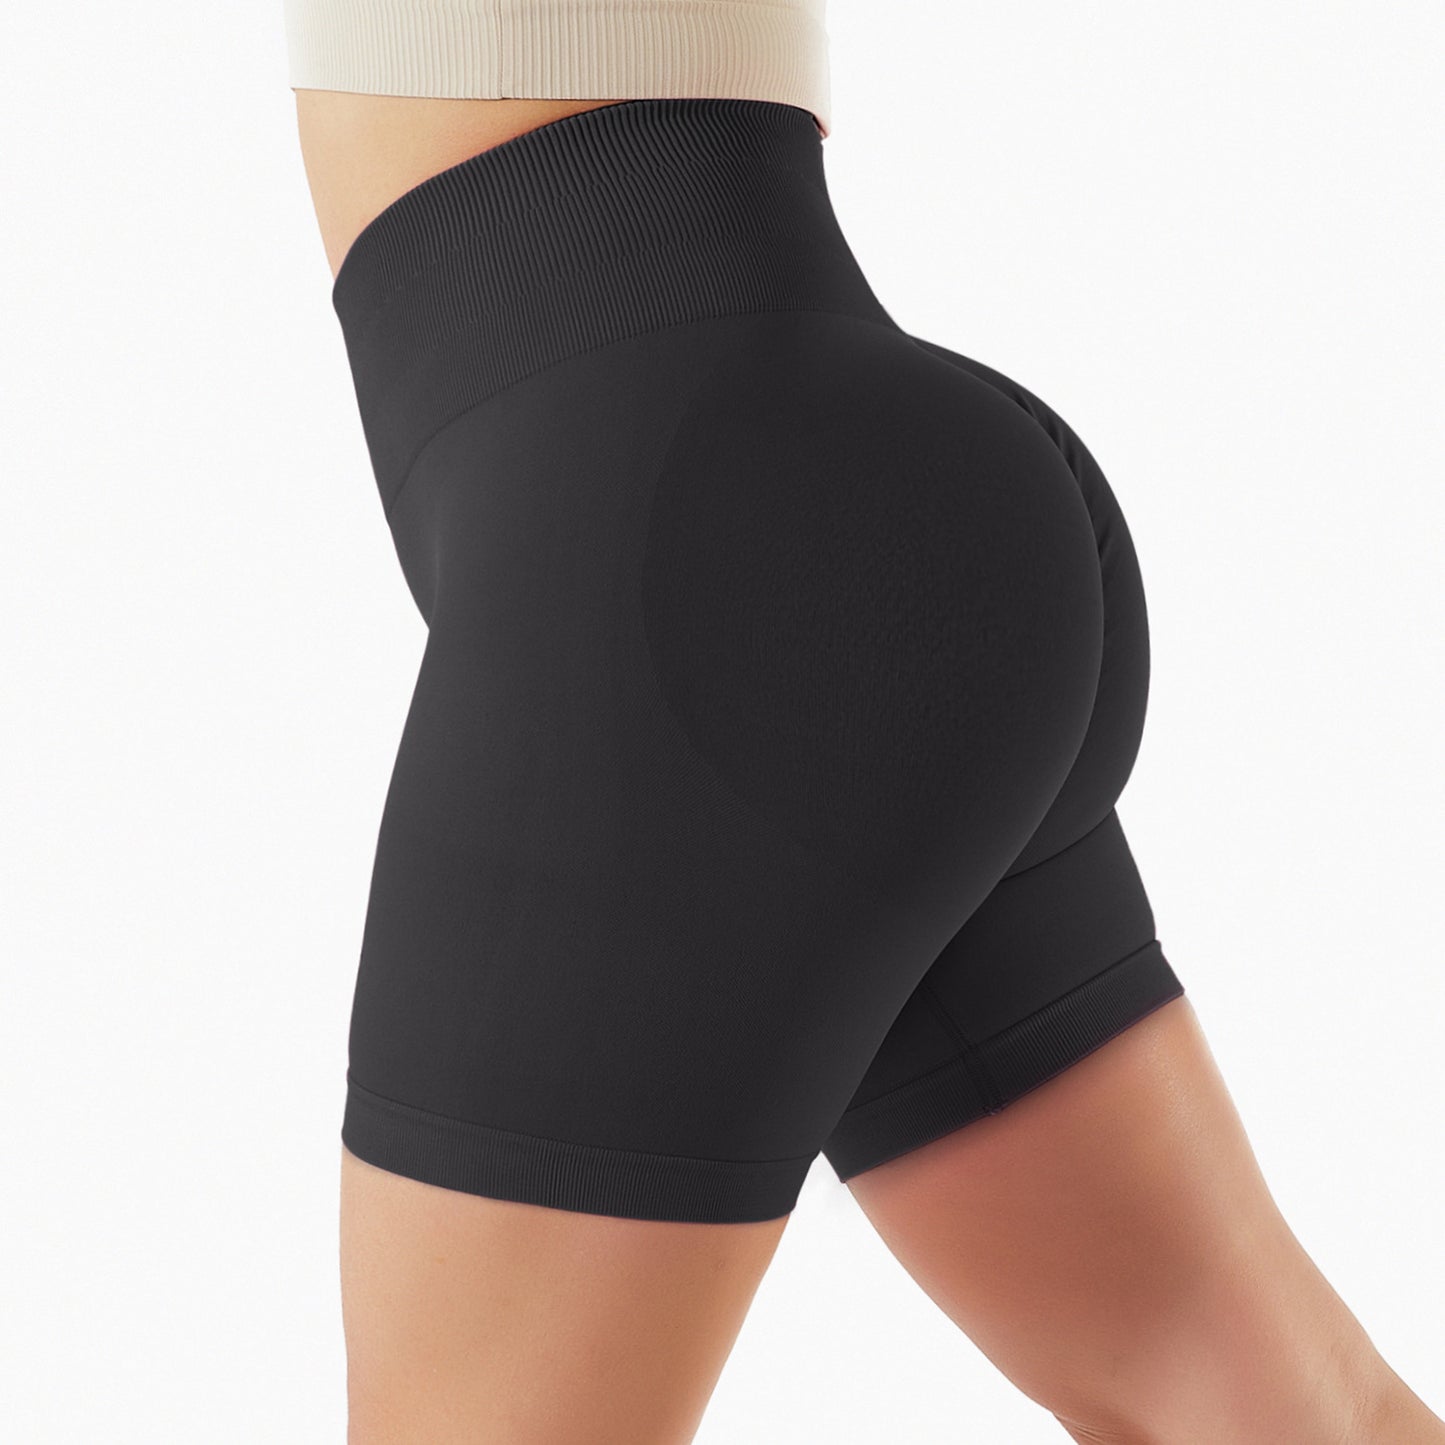 Black signature butt crunch shorts